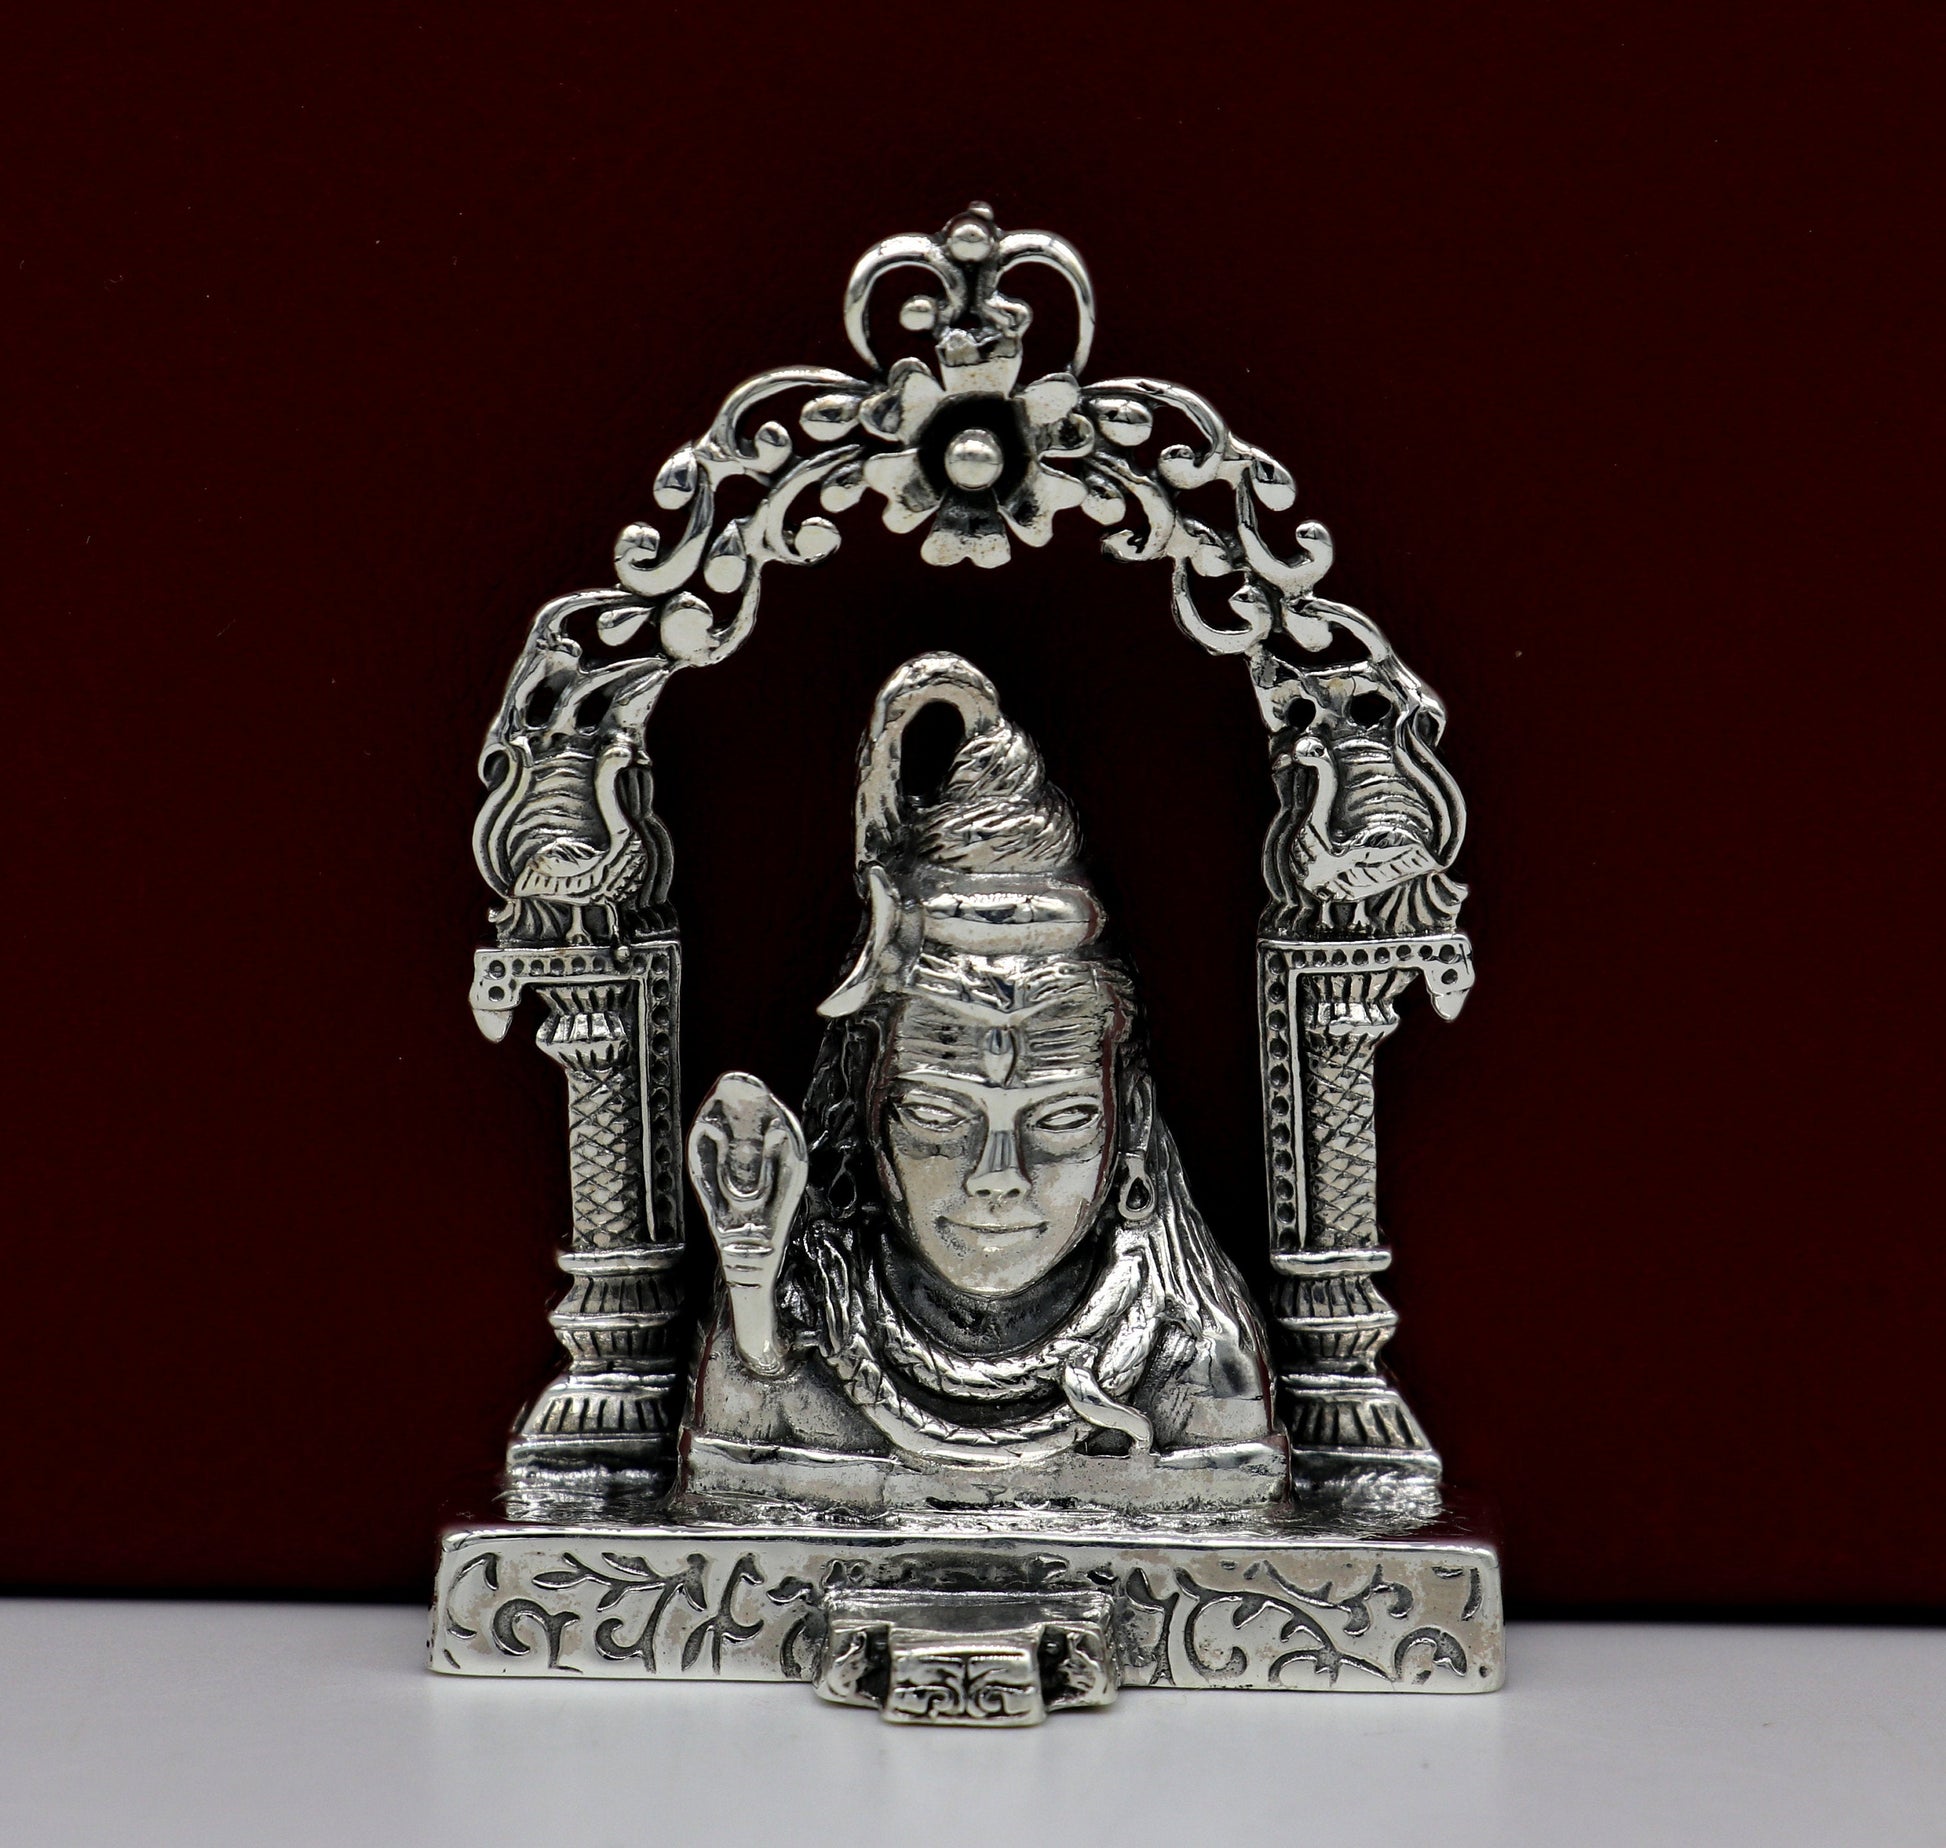 925 Sterling silver handmade antique look Indian Hindu idols Lord Shiva stunning statue figurine, puja articles best decorative gift art11 - TRIBAL ORNAMENTS